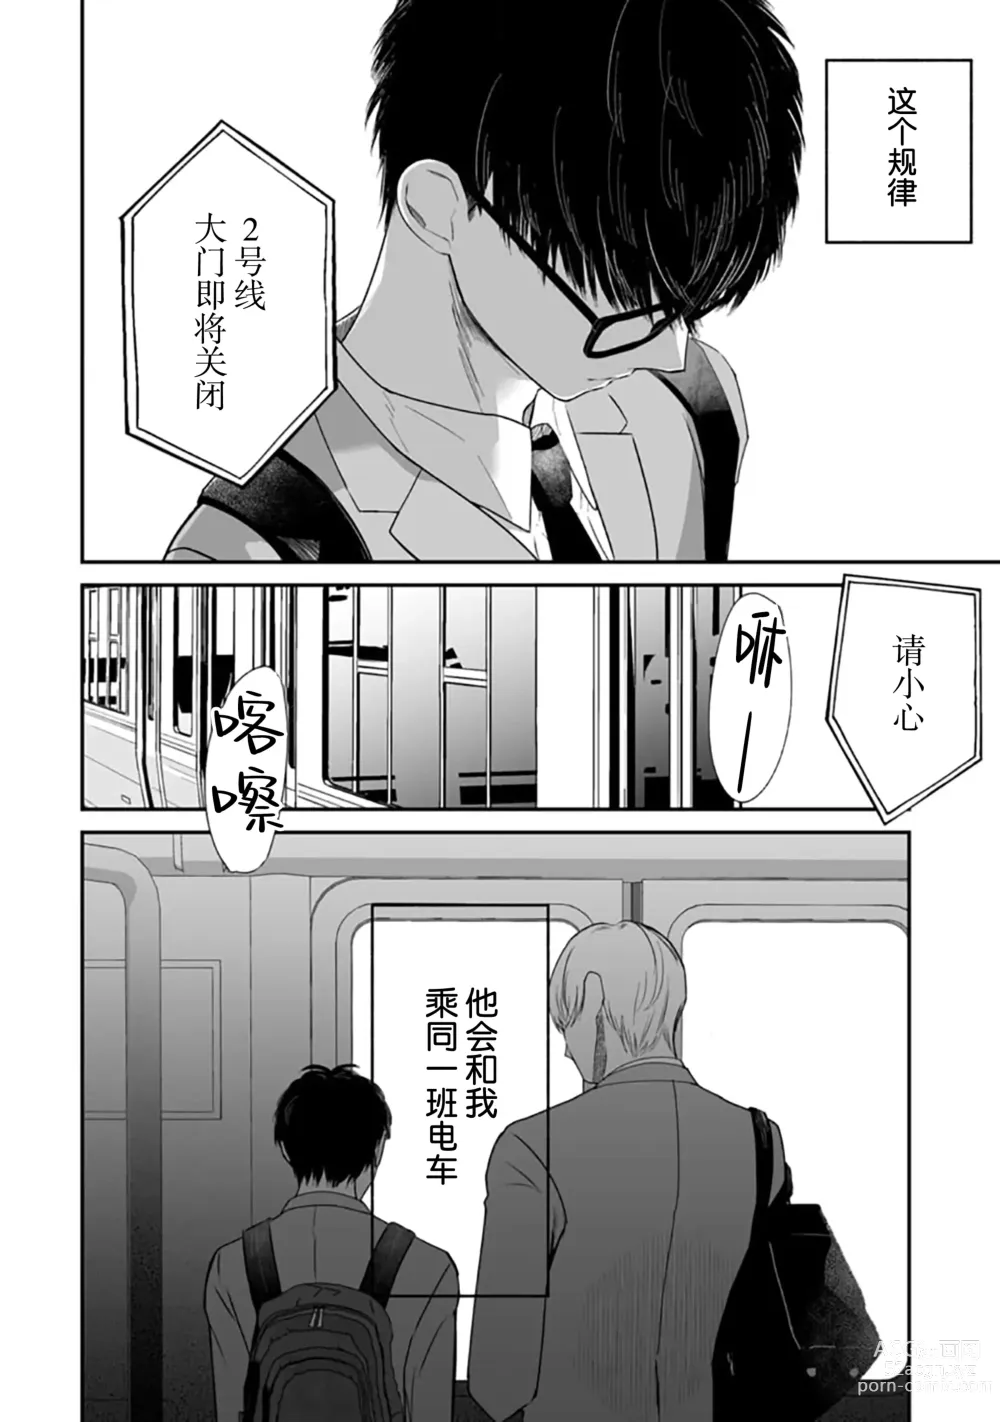 Page 309 of manga 渴望褪下制服